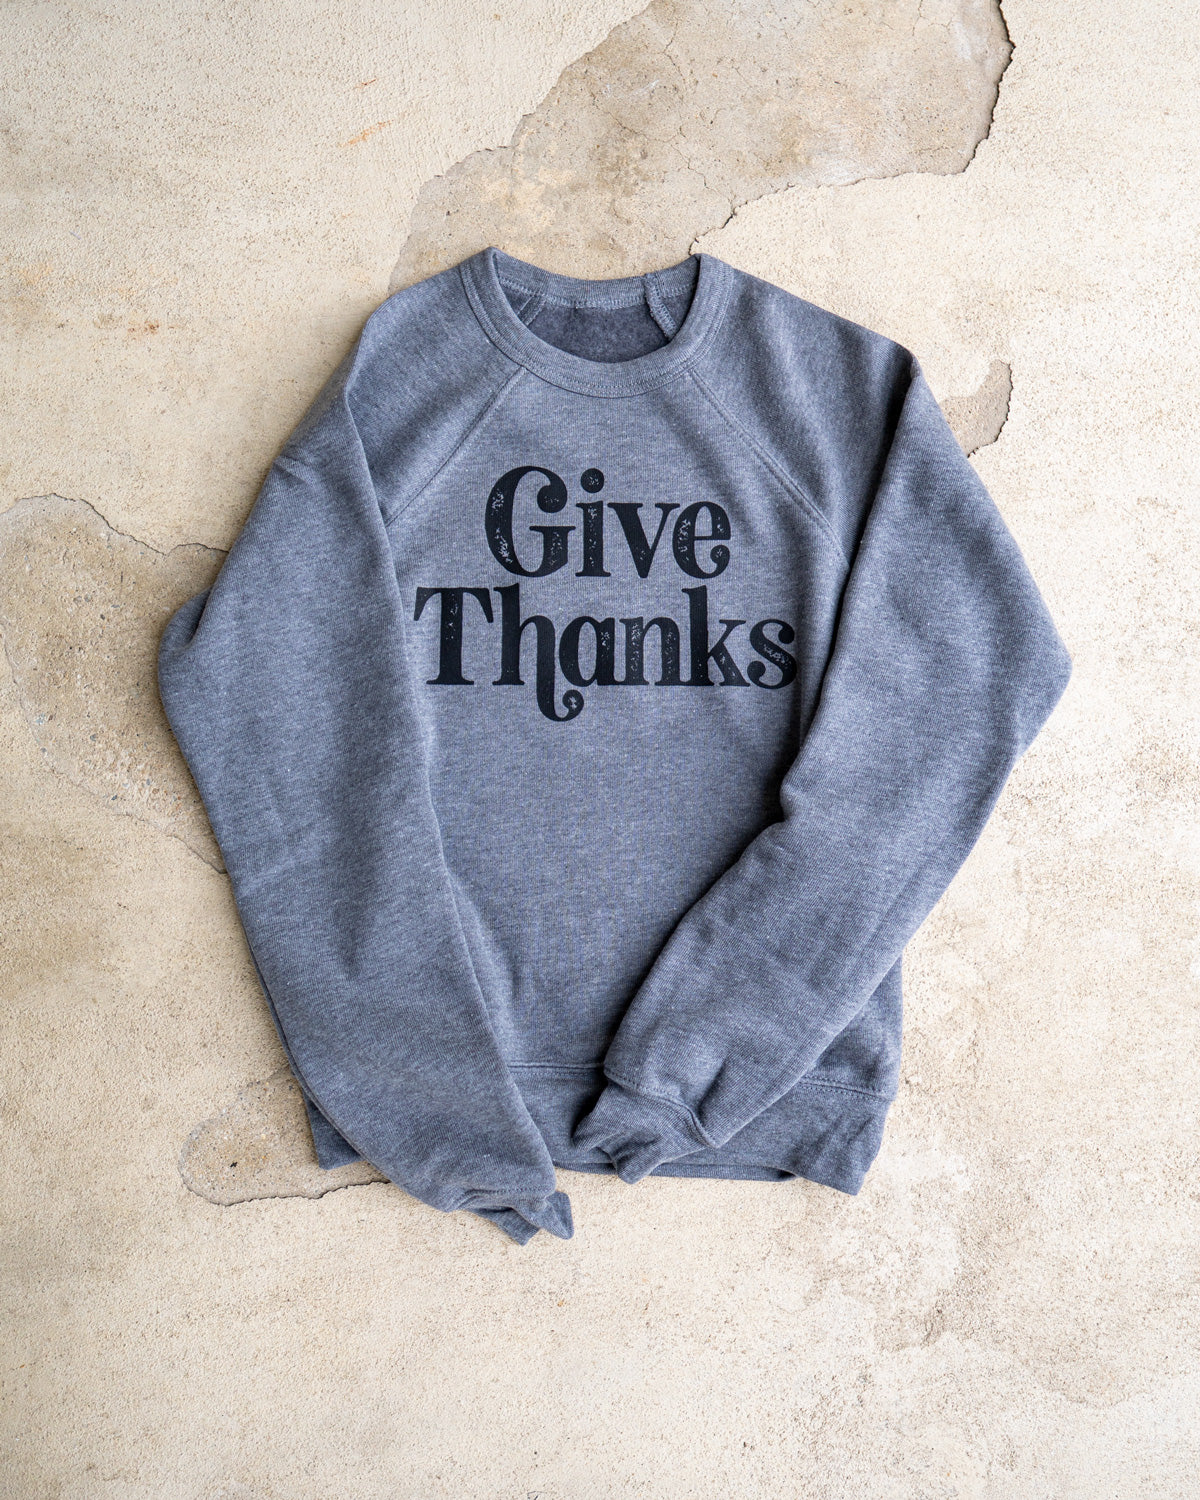 Give Thanks Kids Sweatshirt